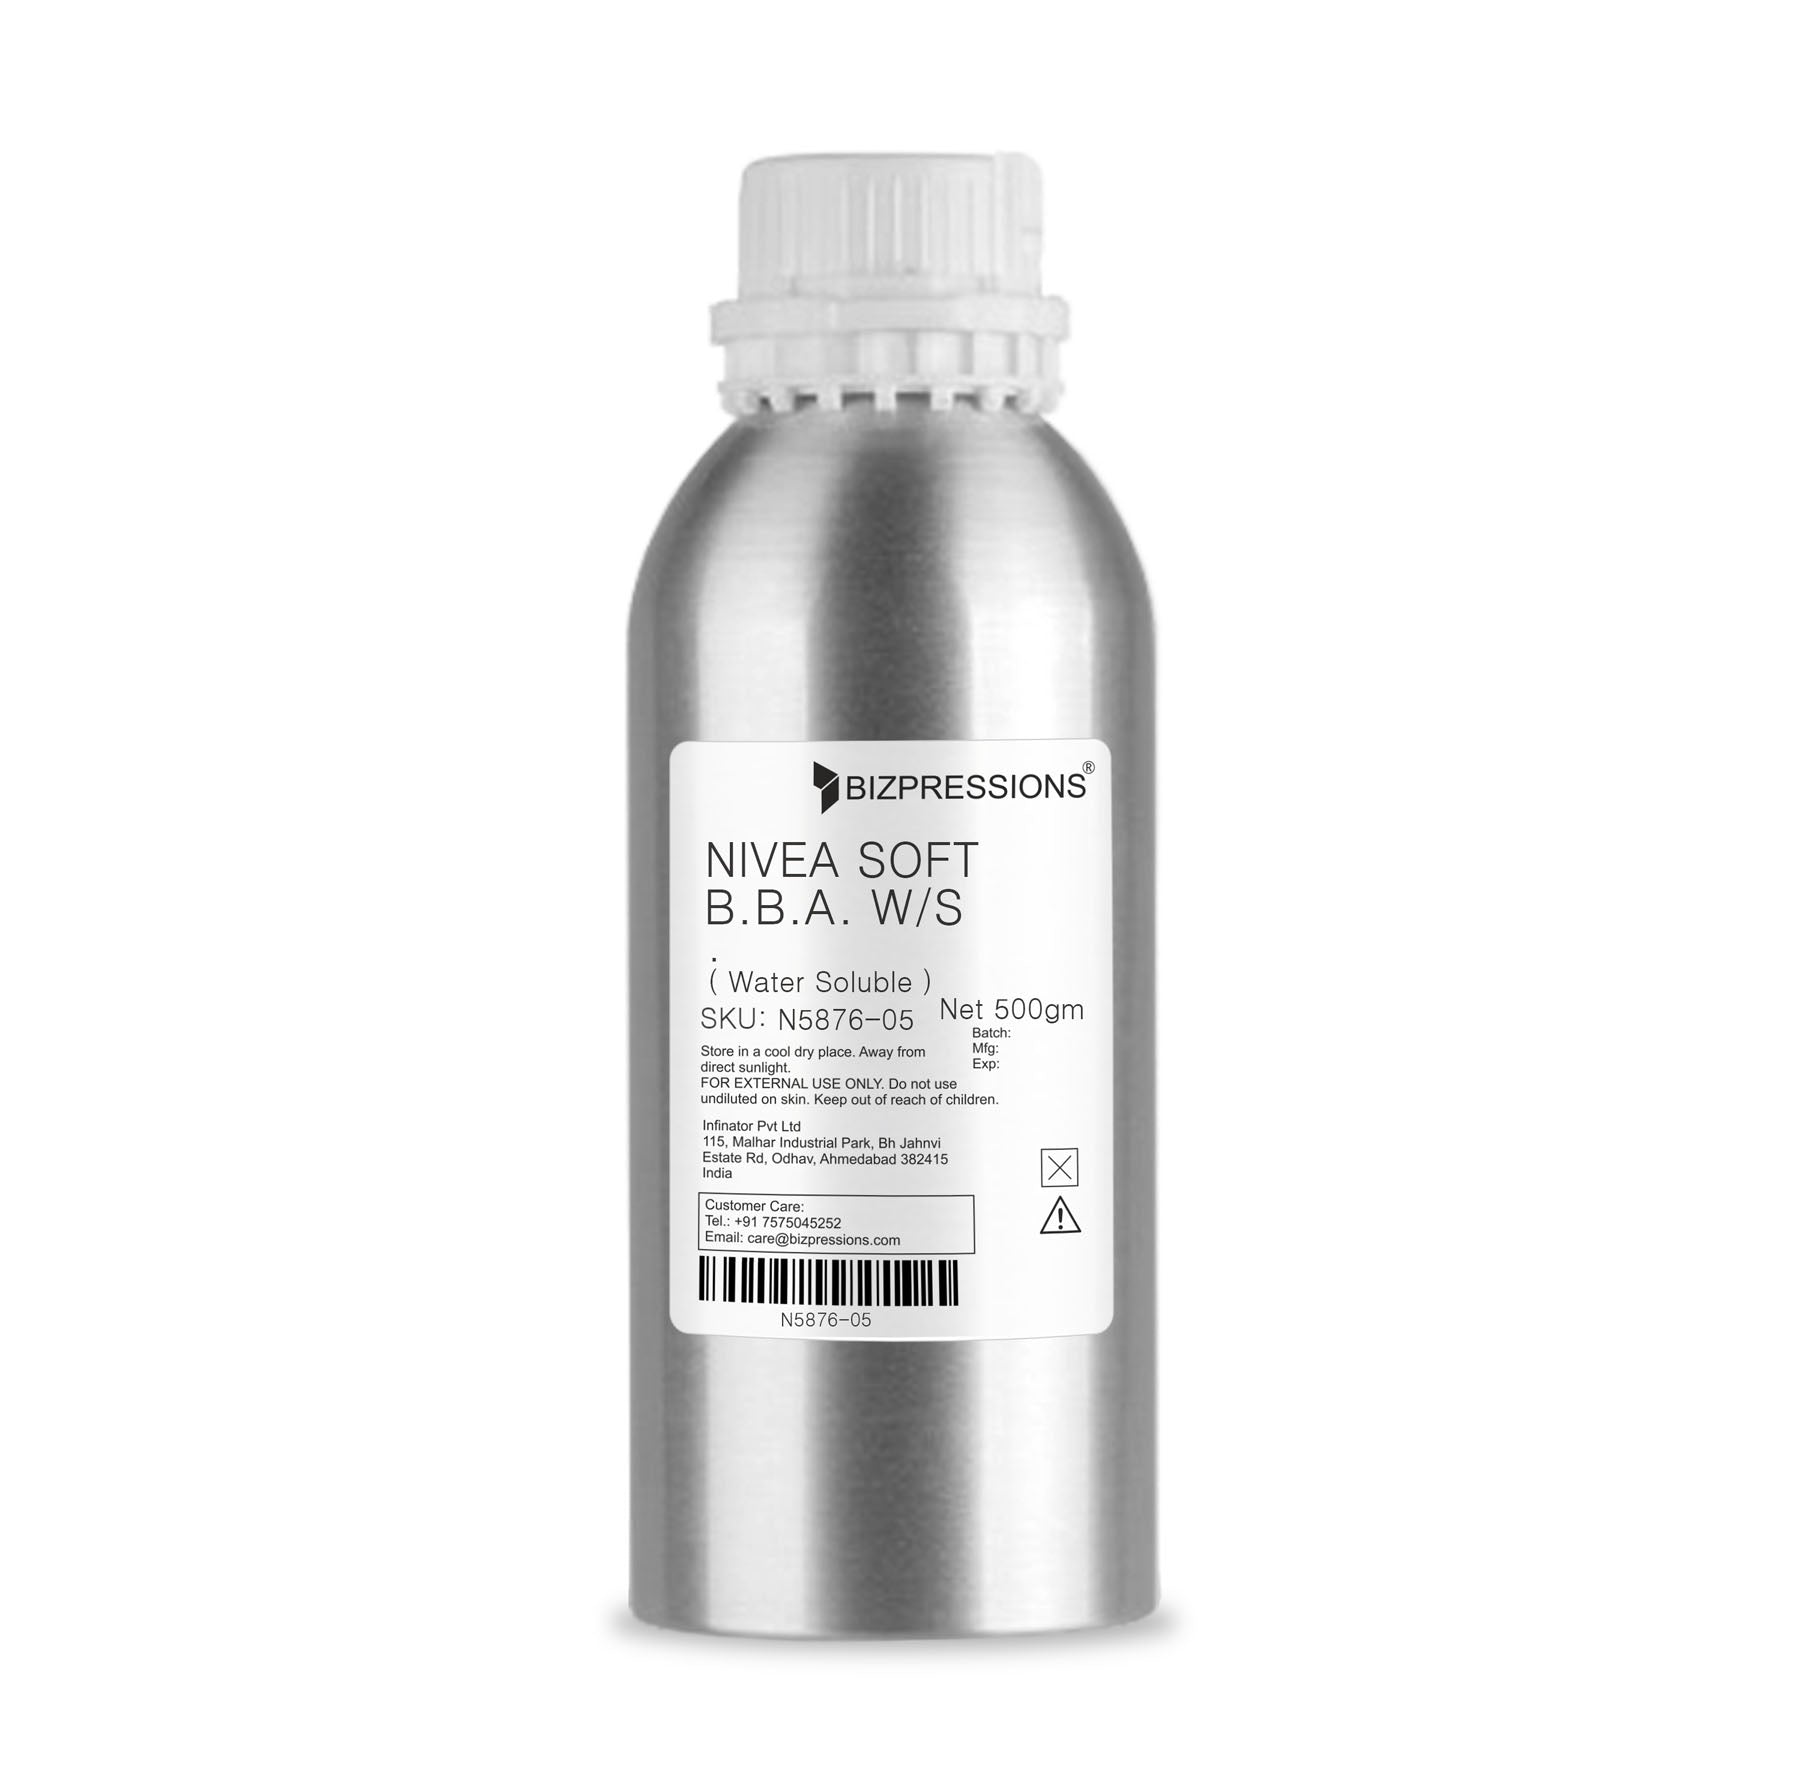 NIVEA SOFT B.B.A. W/S - Fragrance ( Water Soluble ) - 500 gm